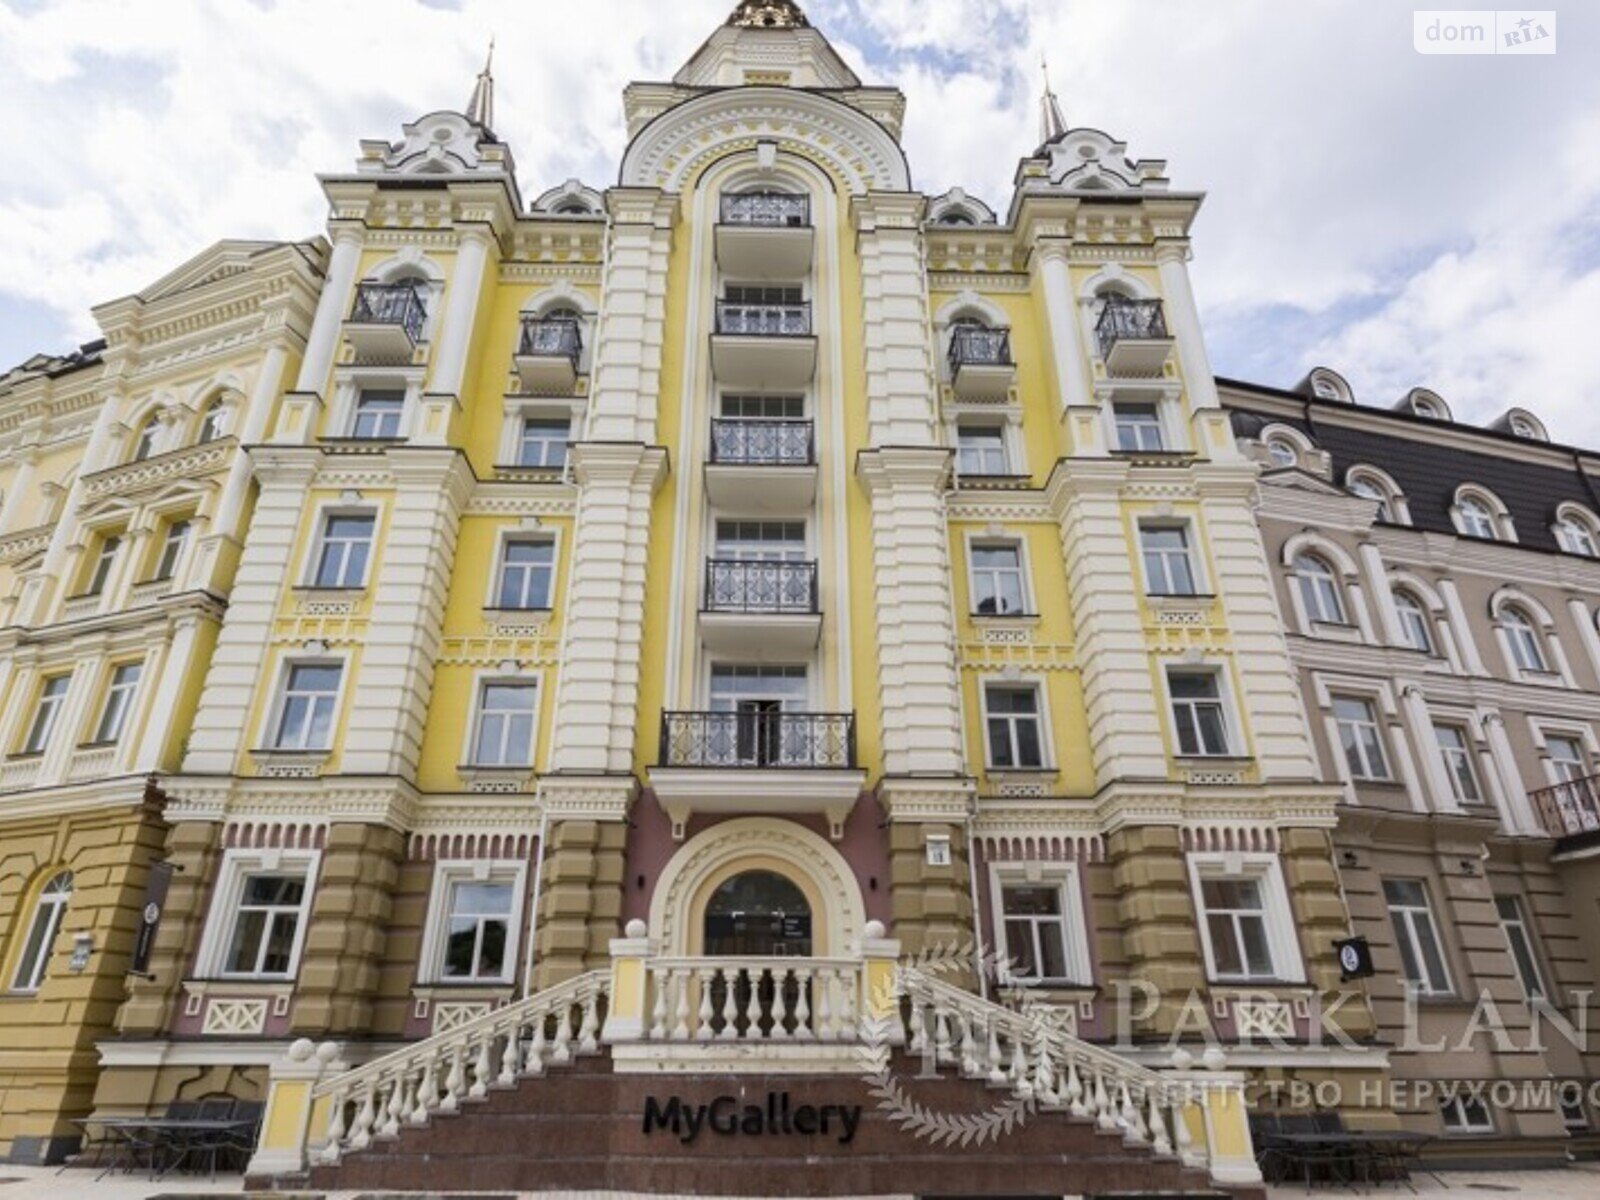 Продажа четырехкомнатной квартиры в Киеве, на ул. Кожемяцкая 18, район Подол фото 1